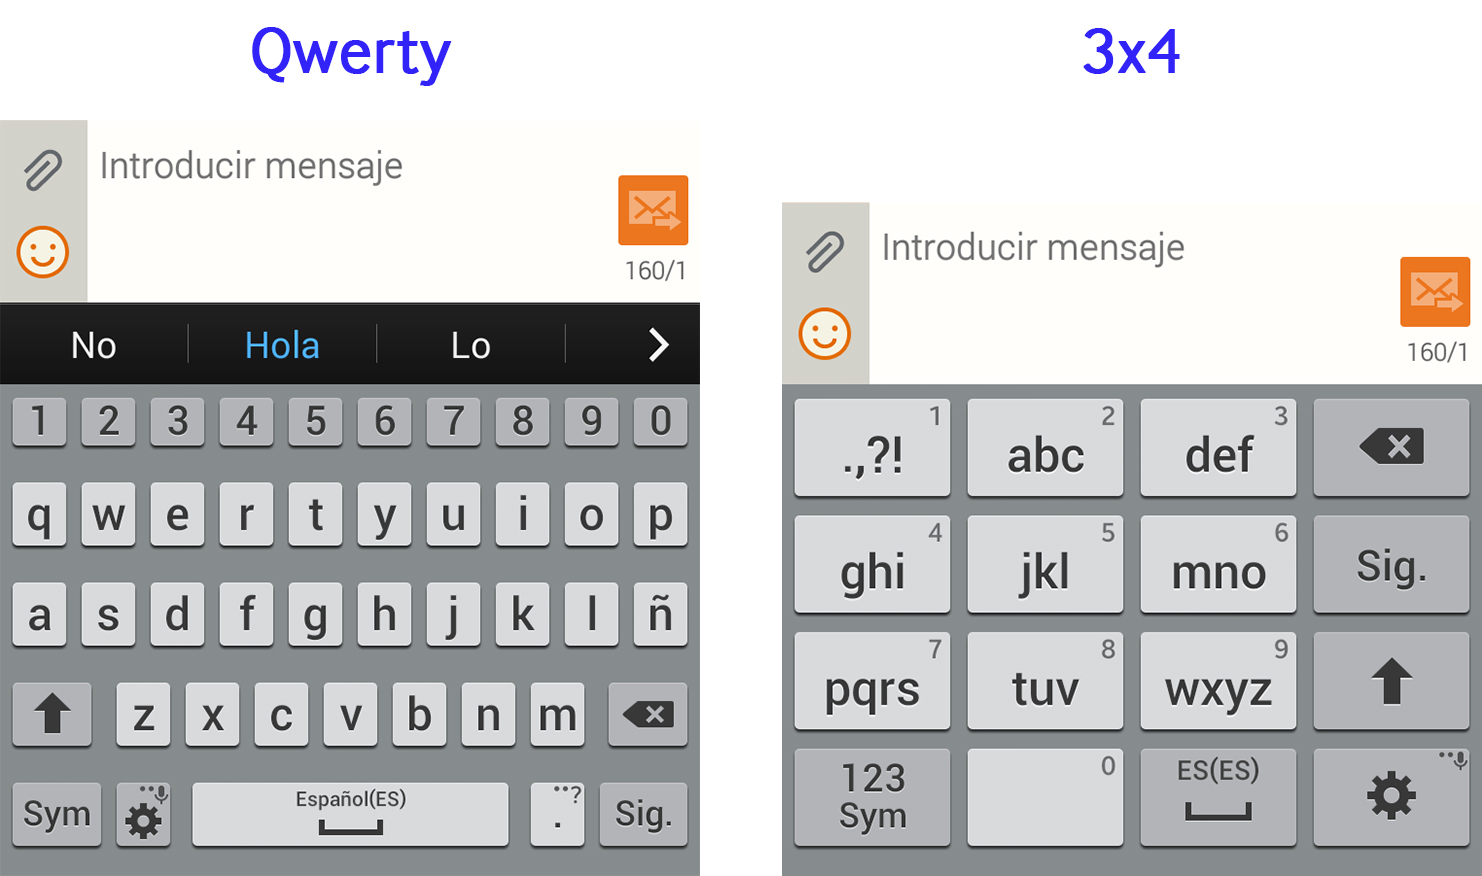 Fiel Centelleo Mártir Galaxy J5: Tipo de teclado: ¿qwerty o 3x4? | Samsung Soporte PE